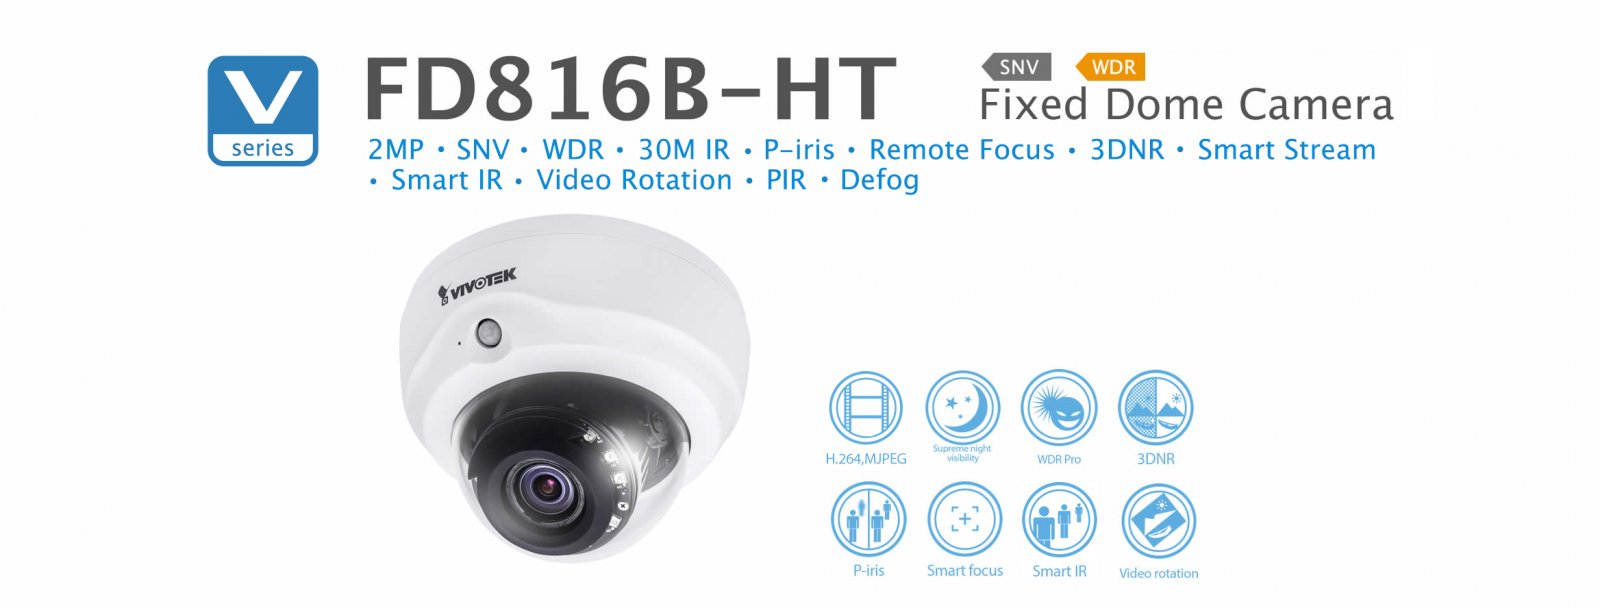 FD816B-HT. Vivotek Fixed Dome Camera